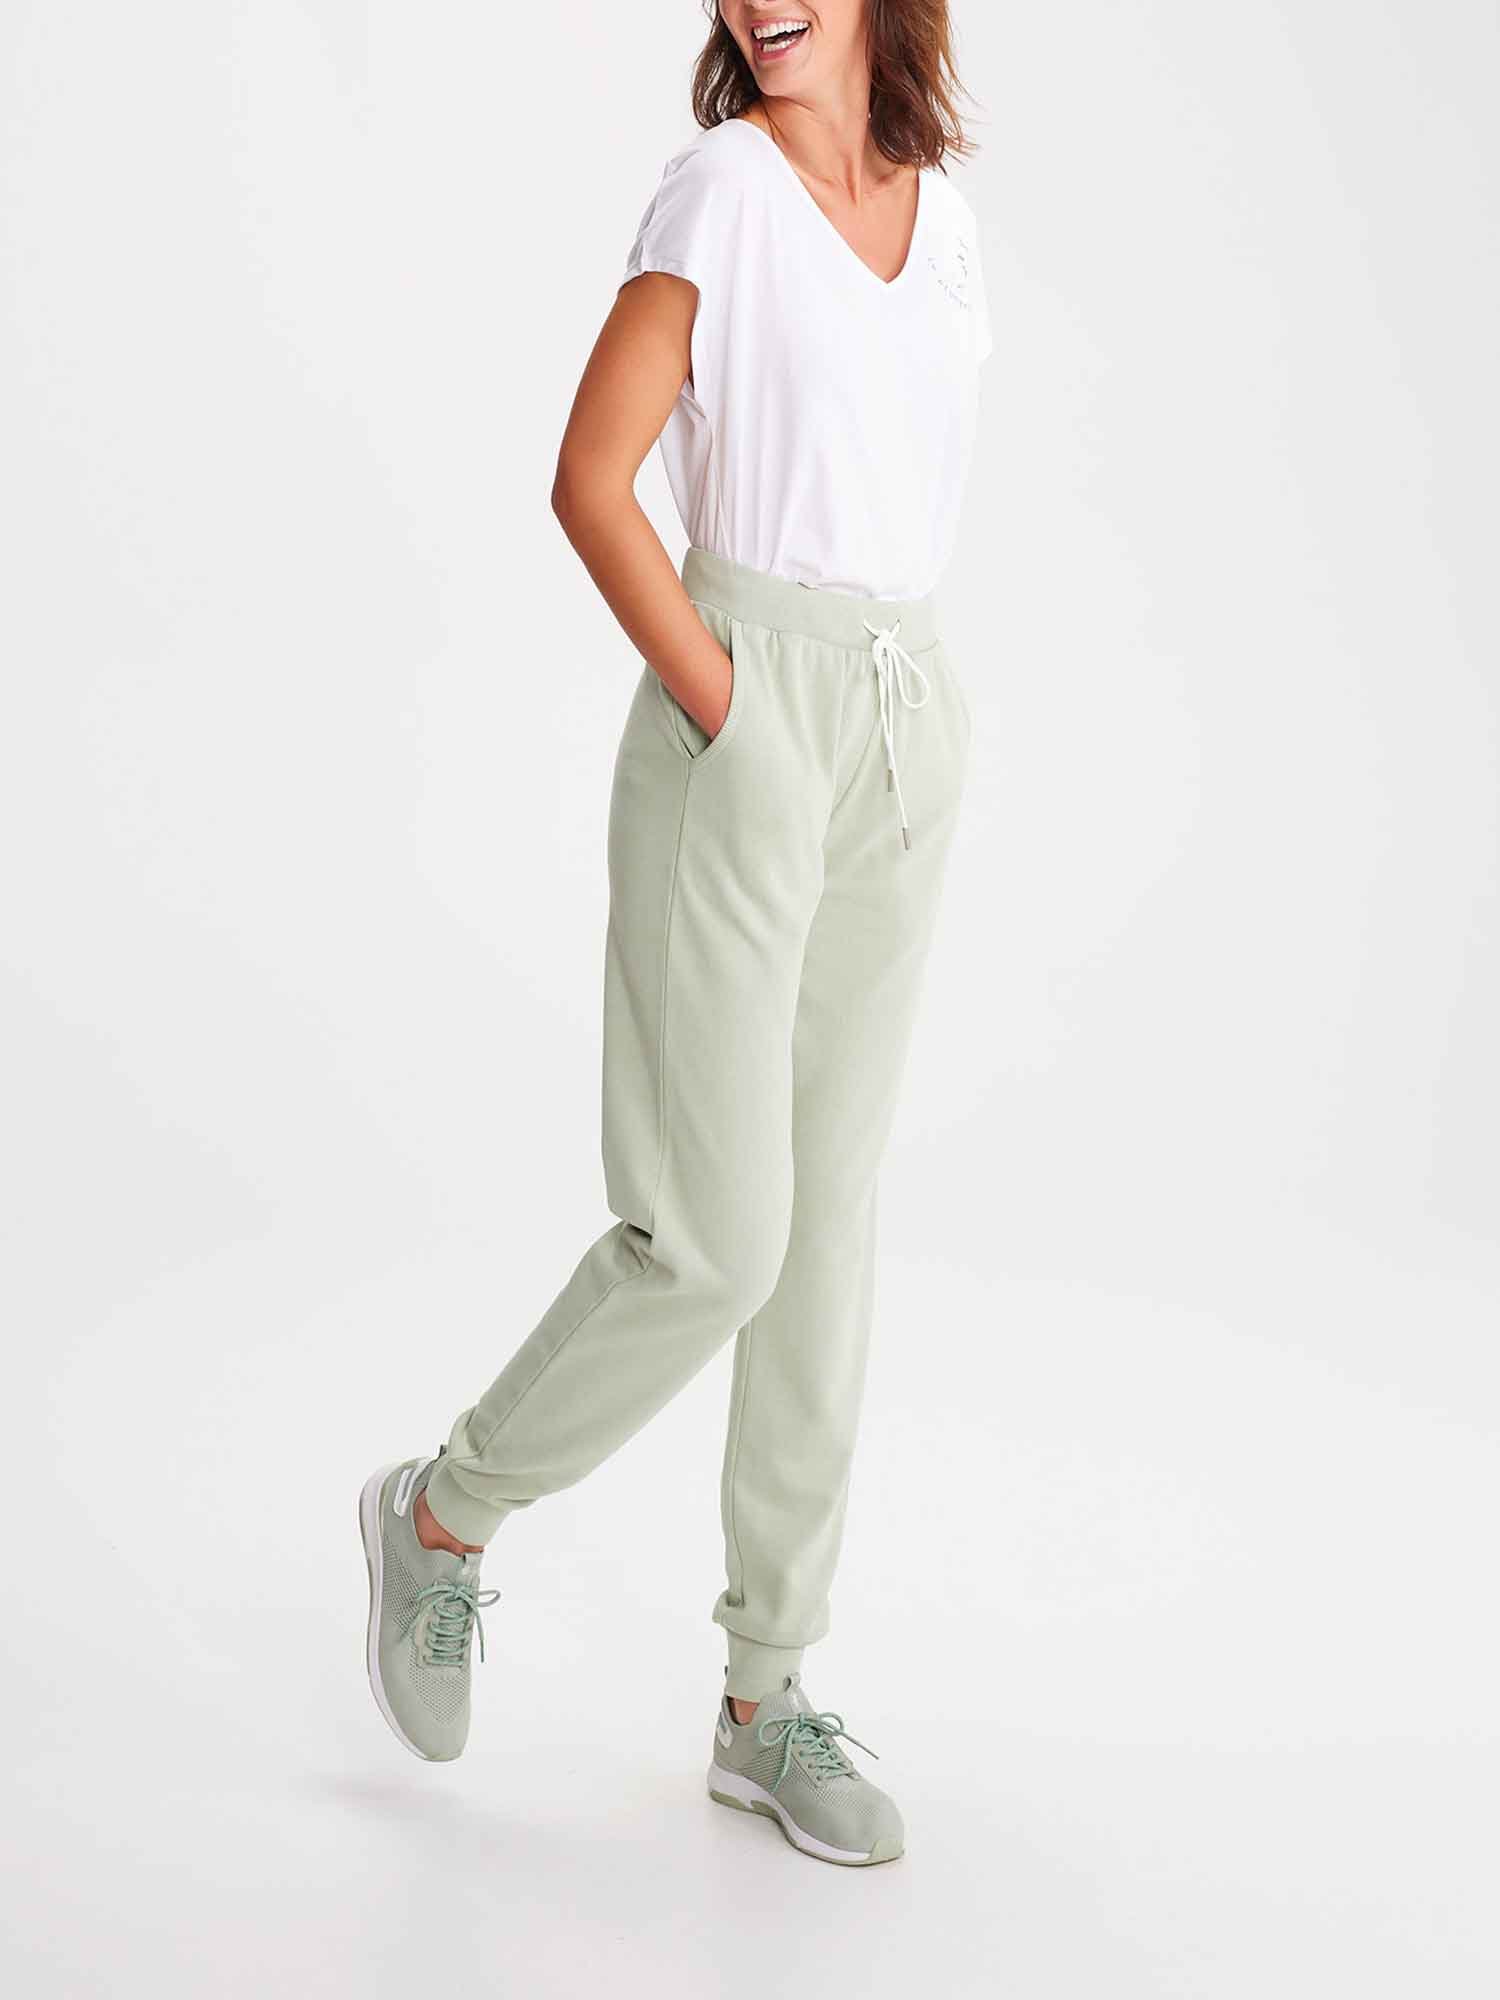 T-Shirt manches courtes Oversize femme Coton blanc - supplytechmaroc